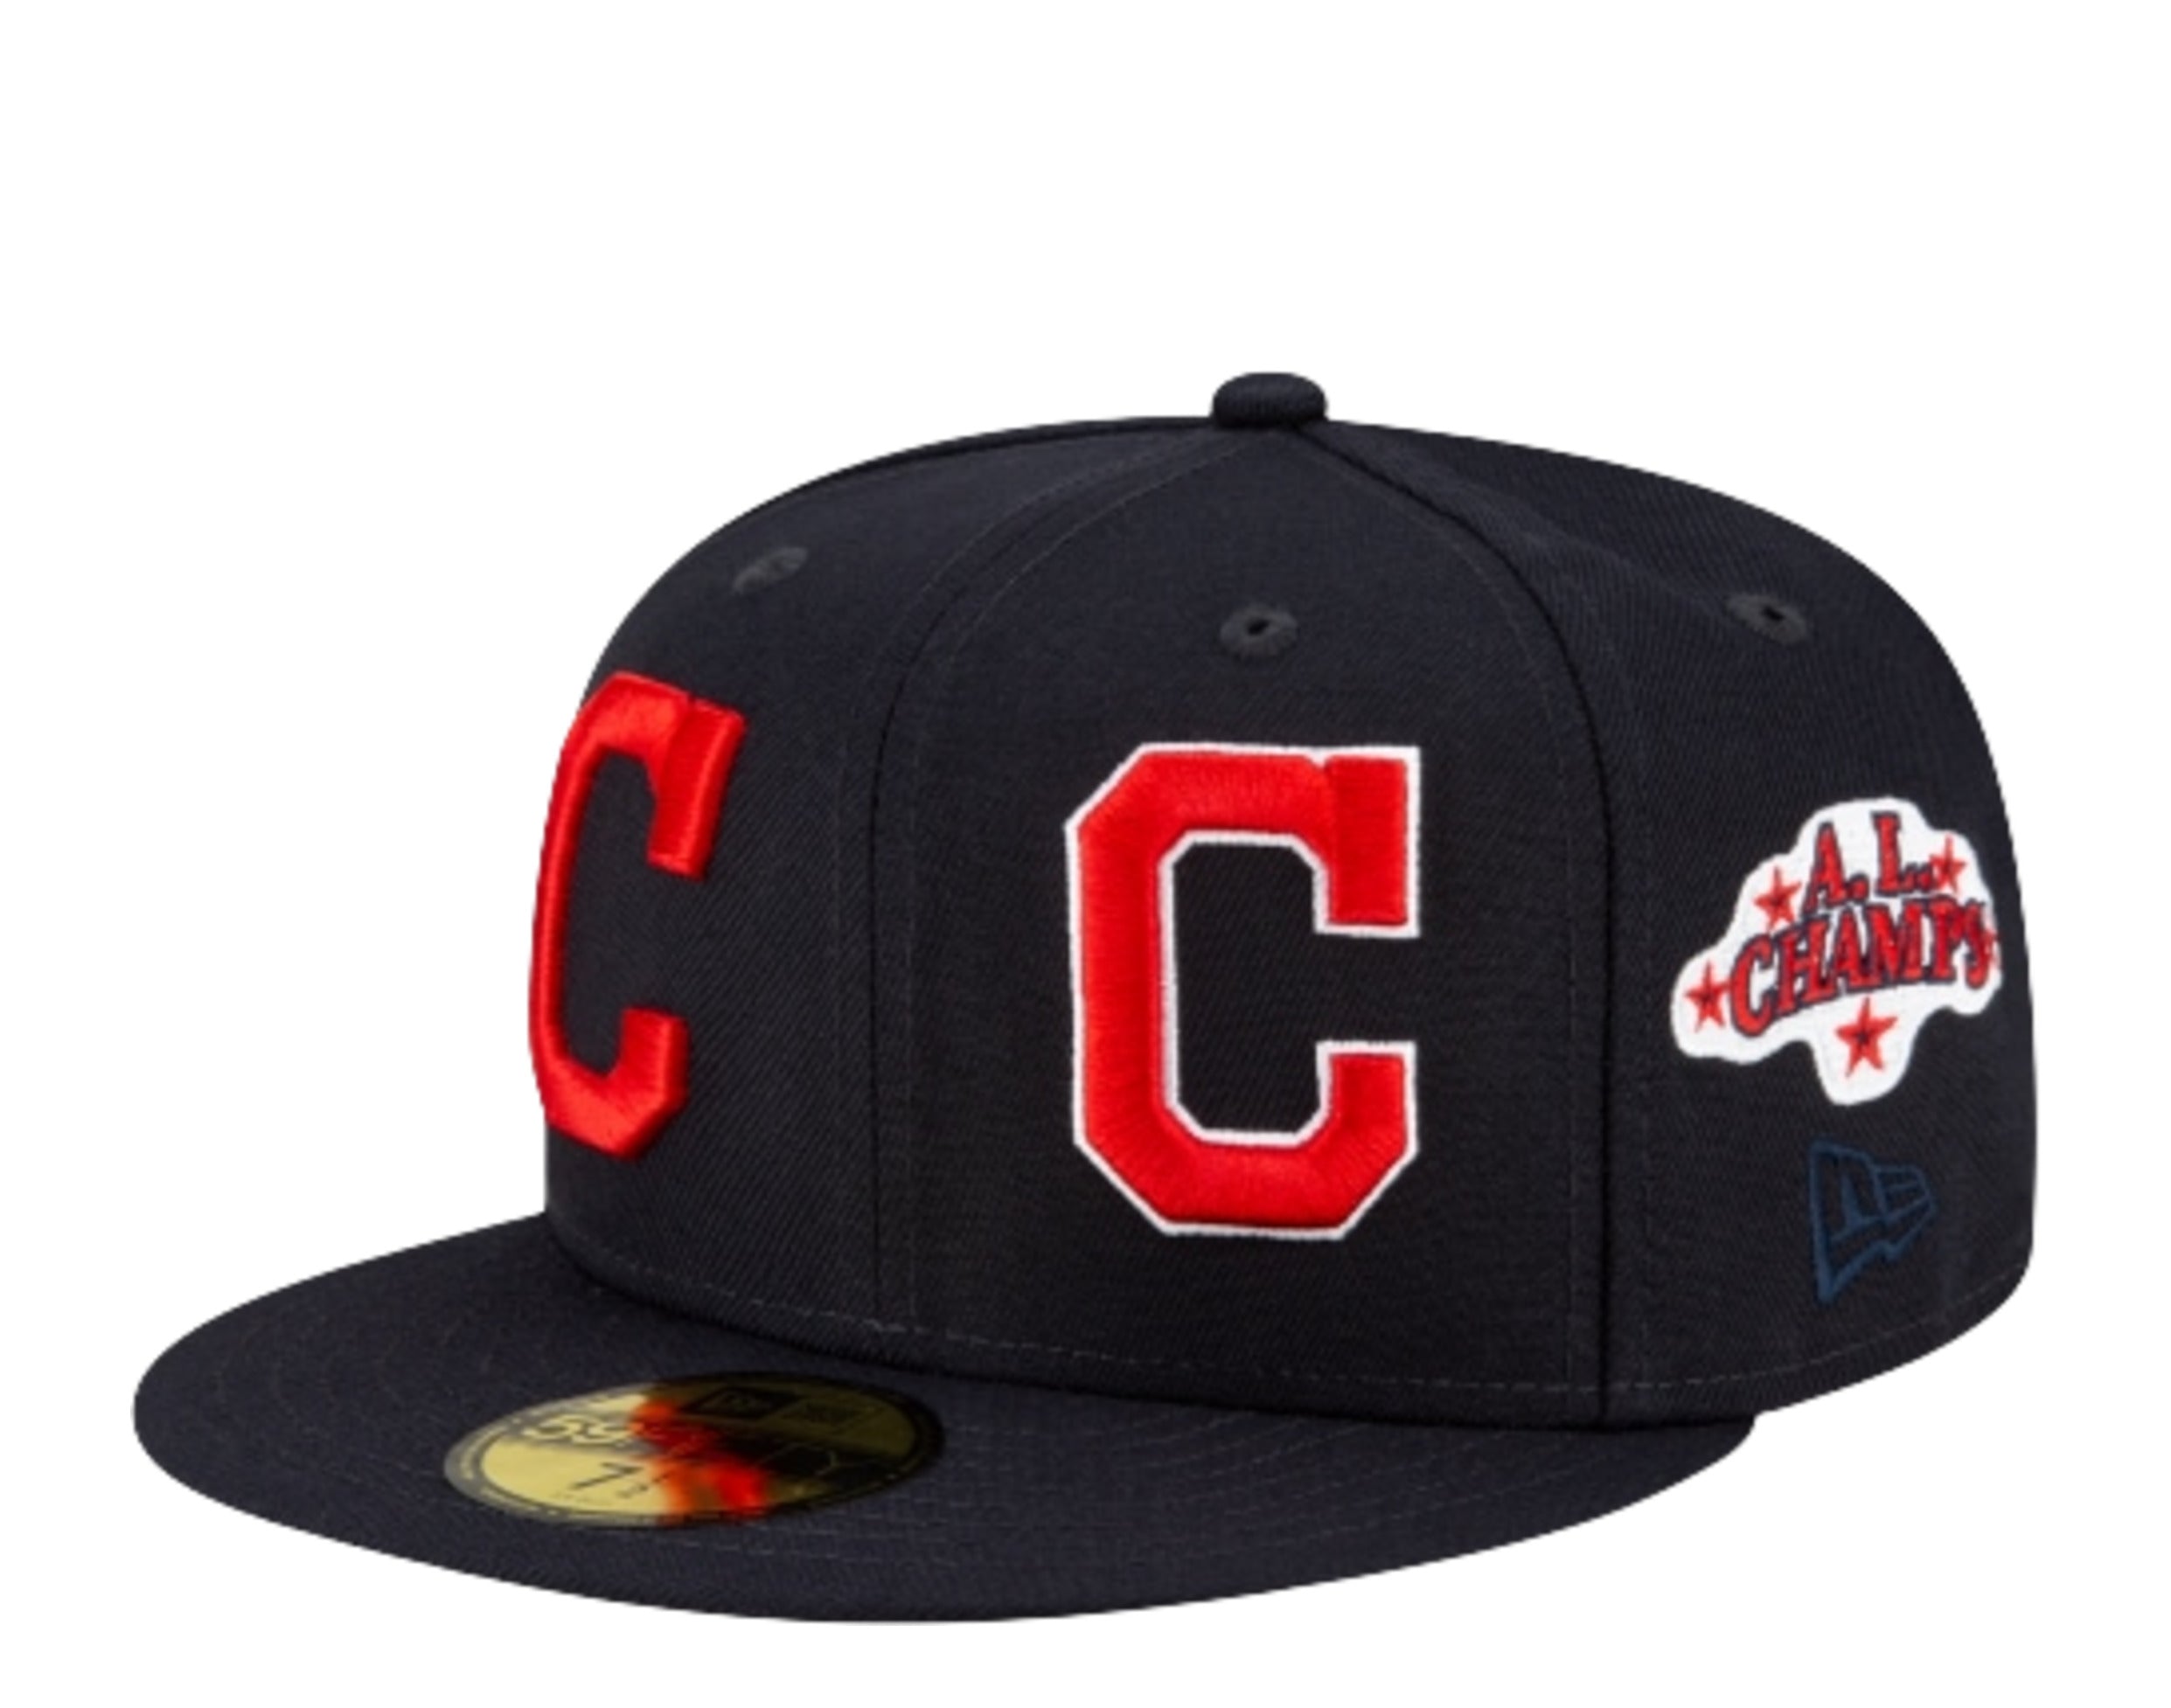 Cleveland indians baseball cap - Gem